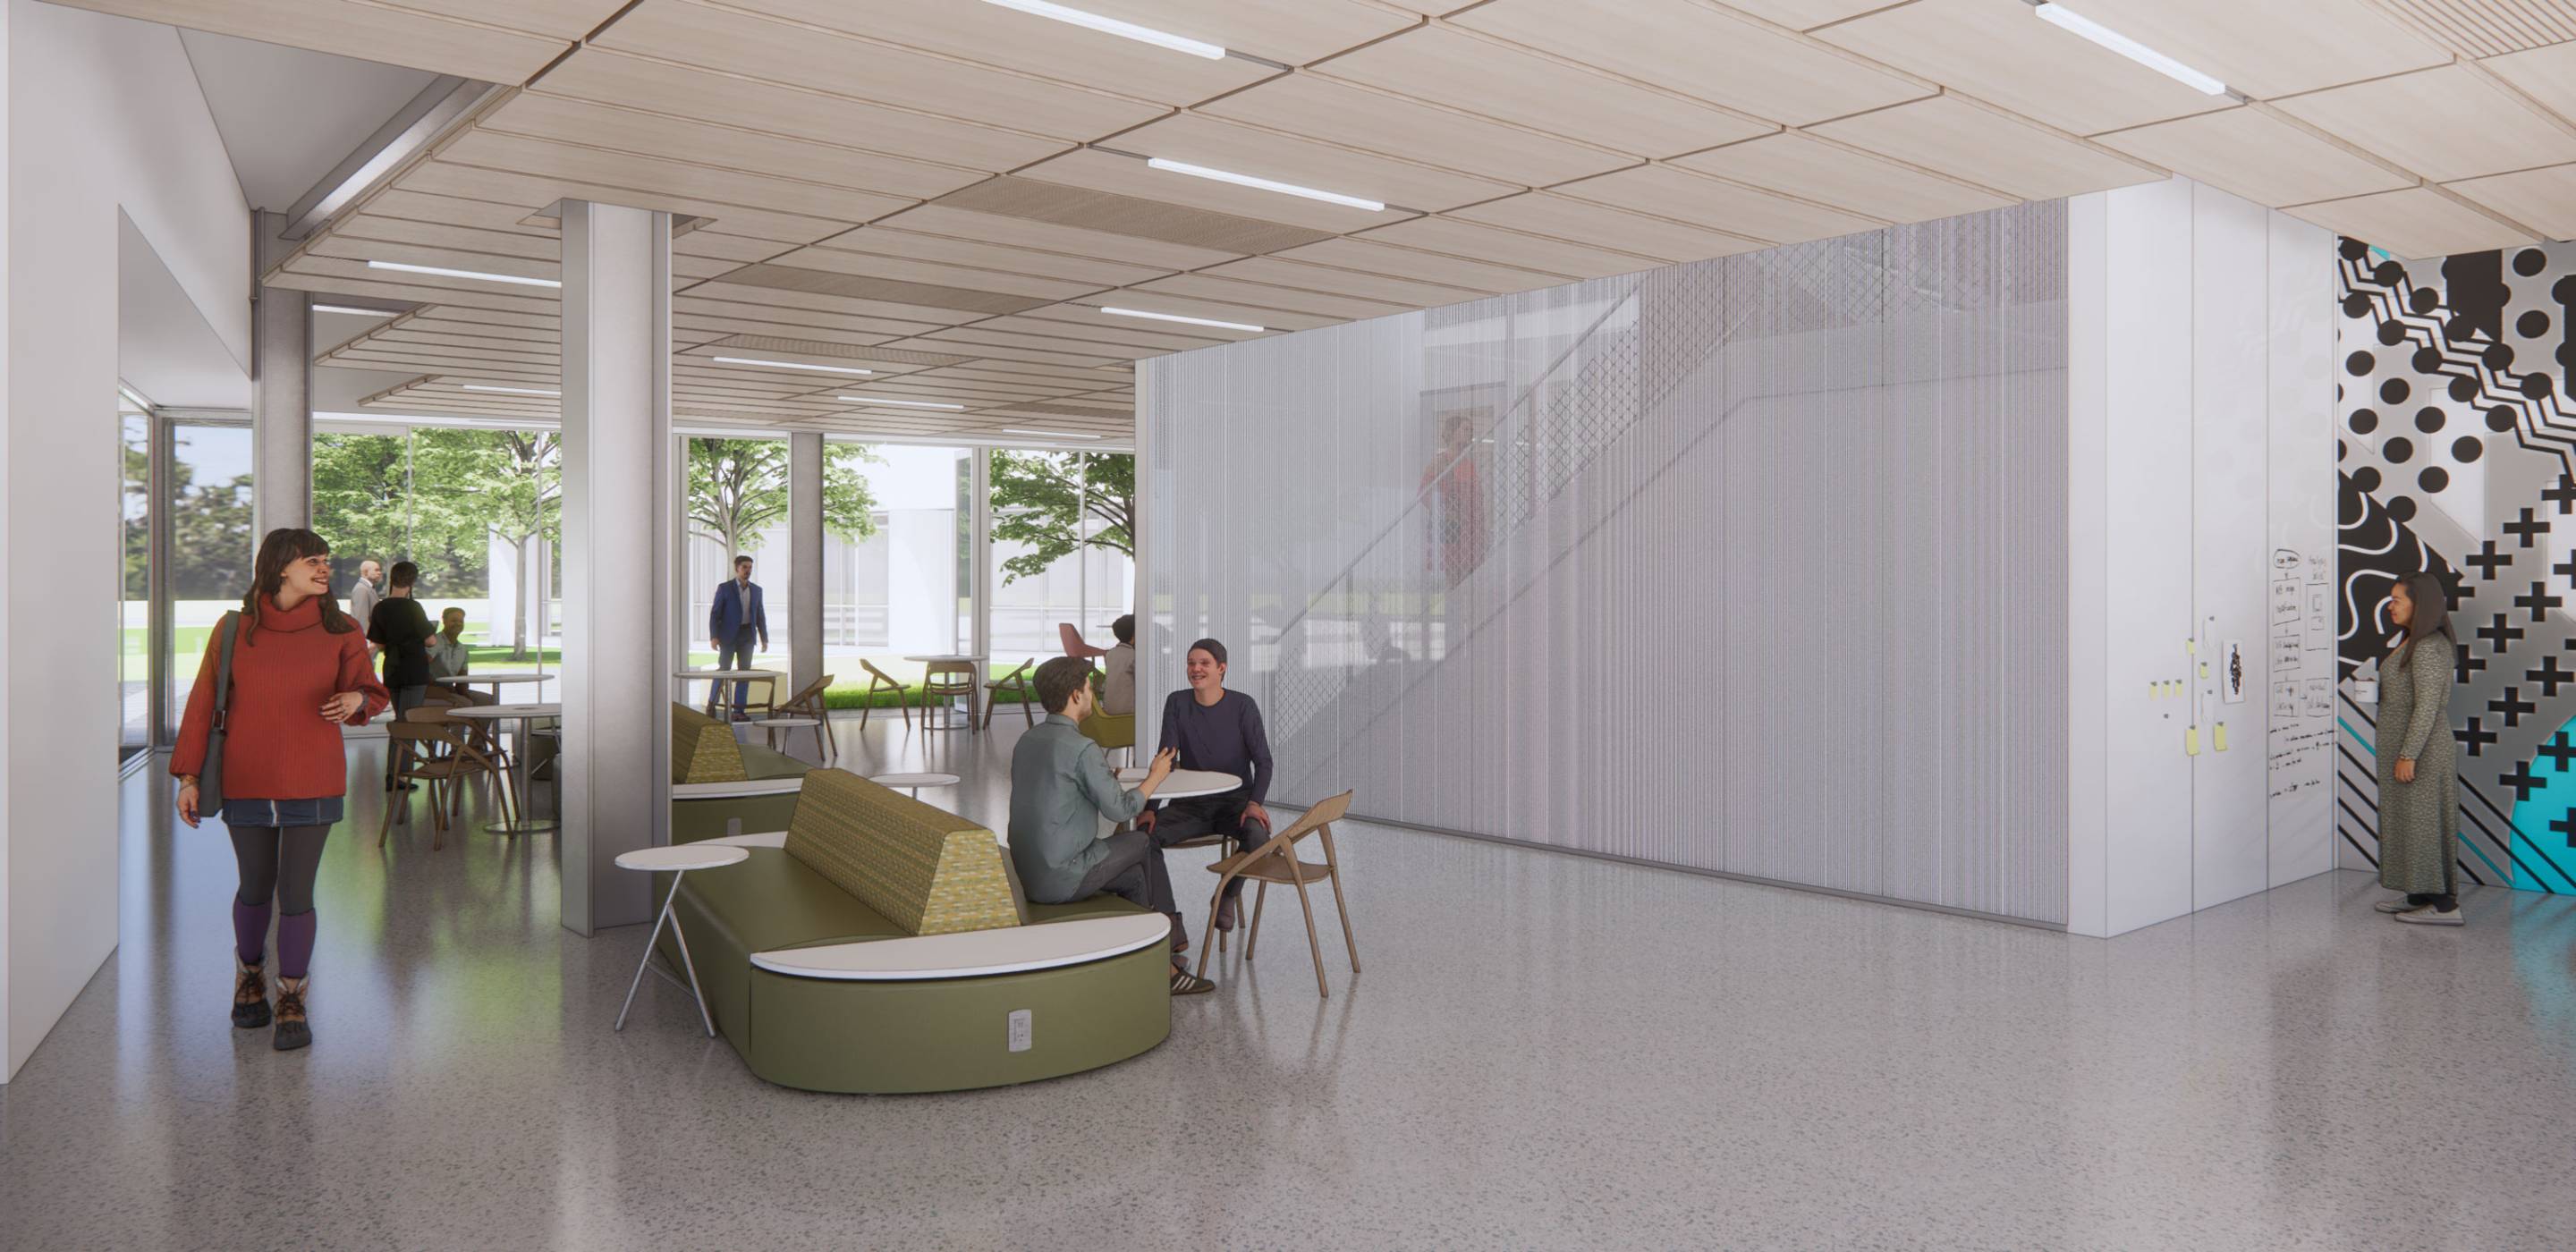 Proposed image of the Cafe inside the Princeton Plasma Innovation Center